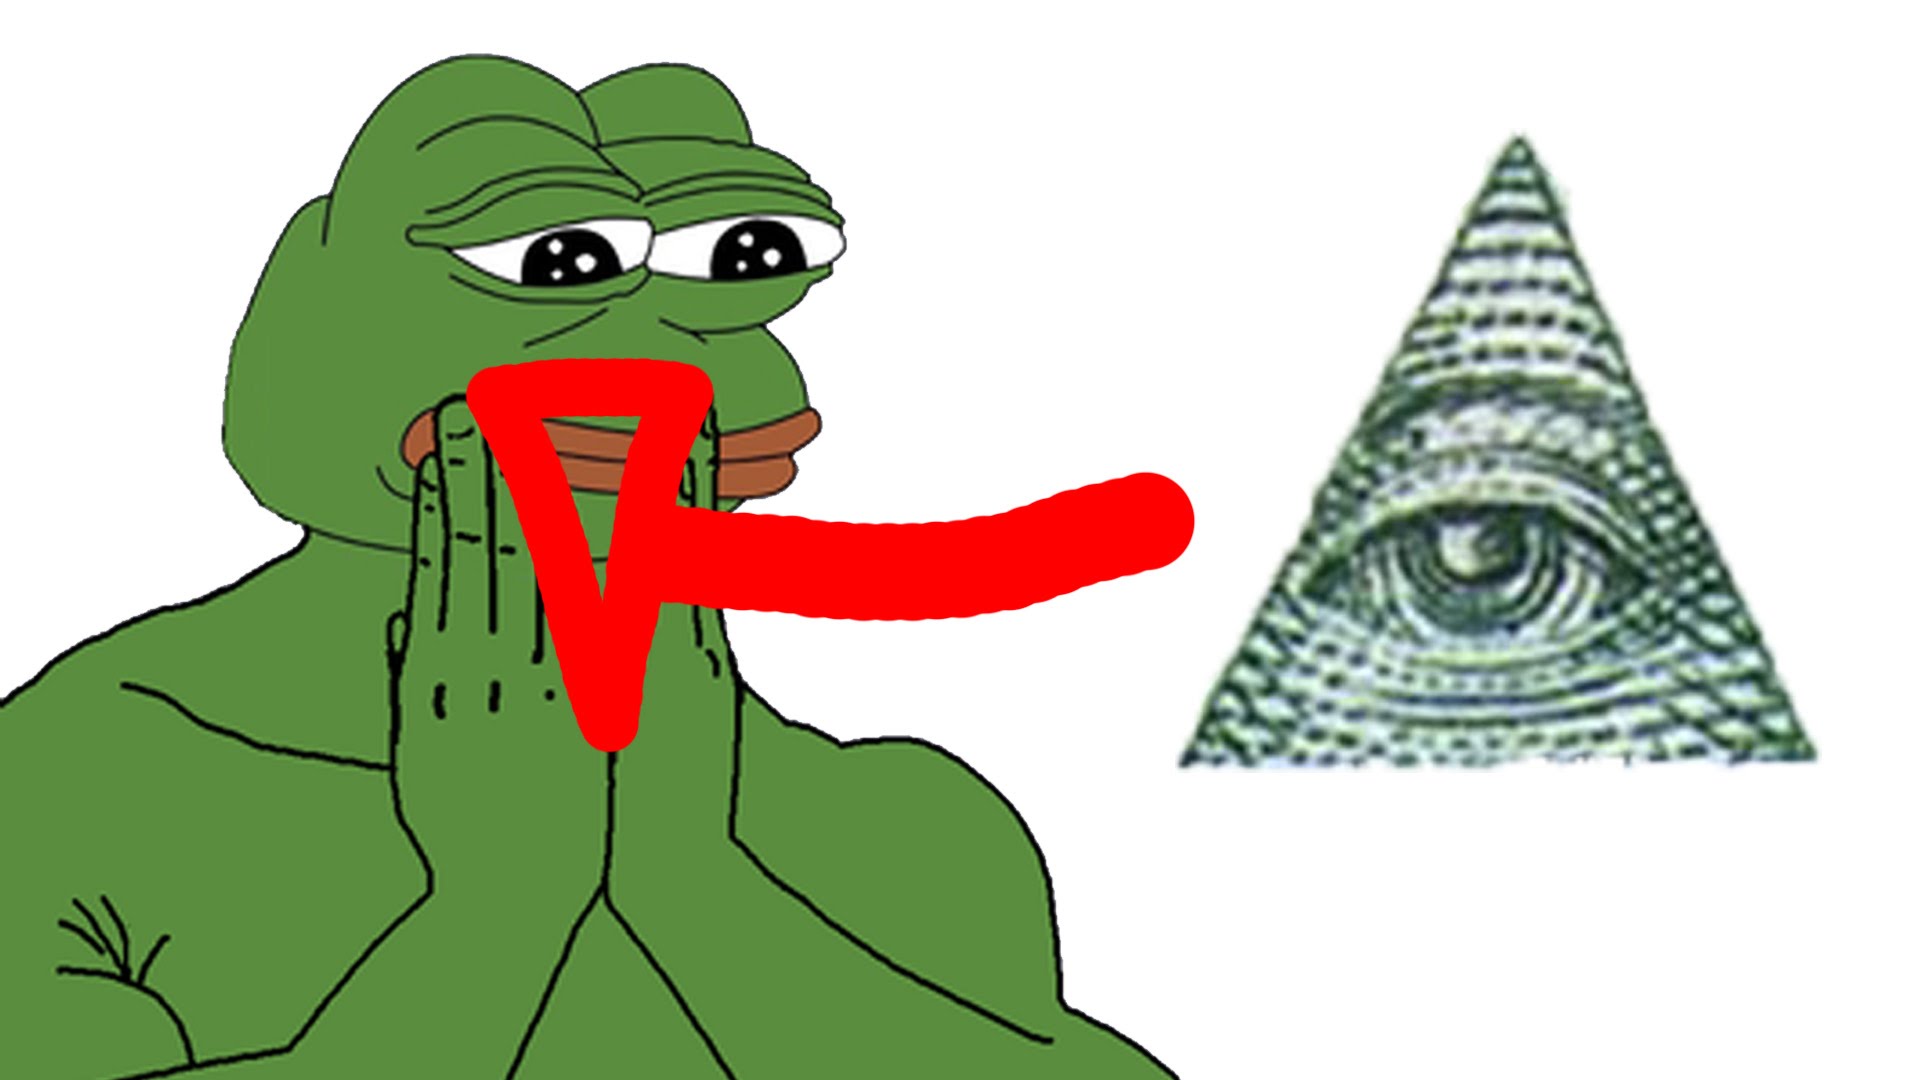 Pepe is Illuminati